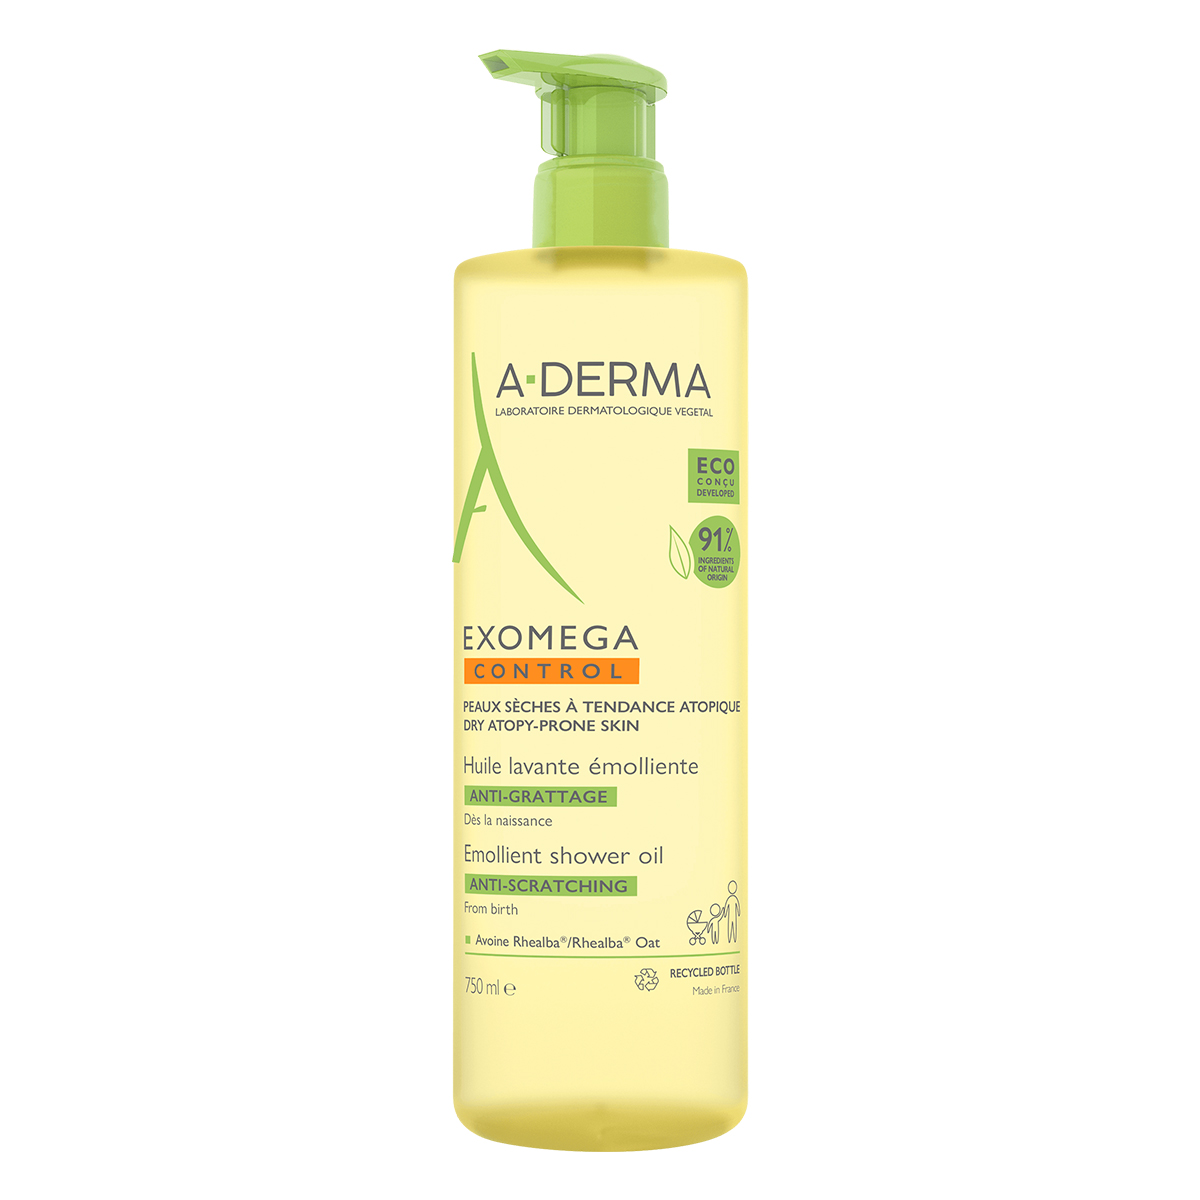 A-Derma Exomega Control масло для душа смягчающее, 750 мл anatomy очищающее и смягчающее масло для душа 300